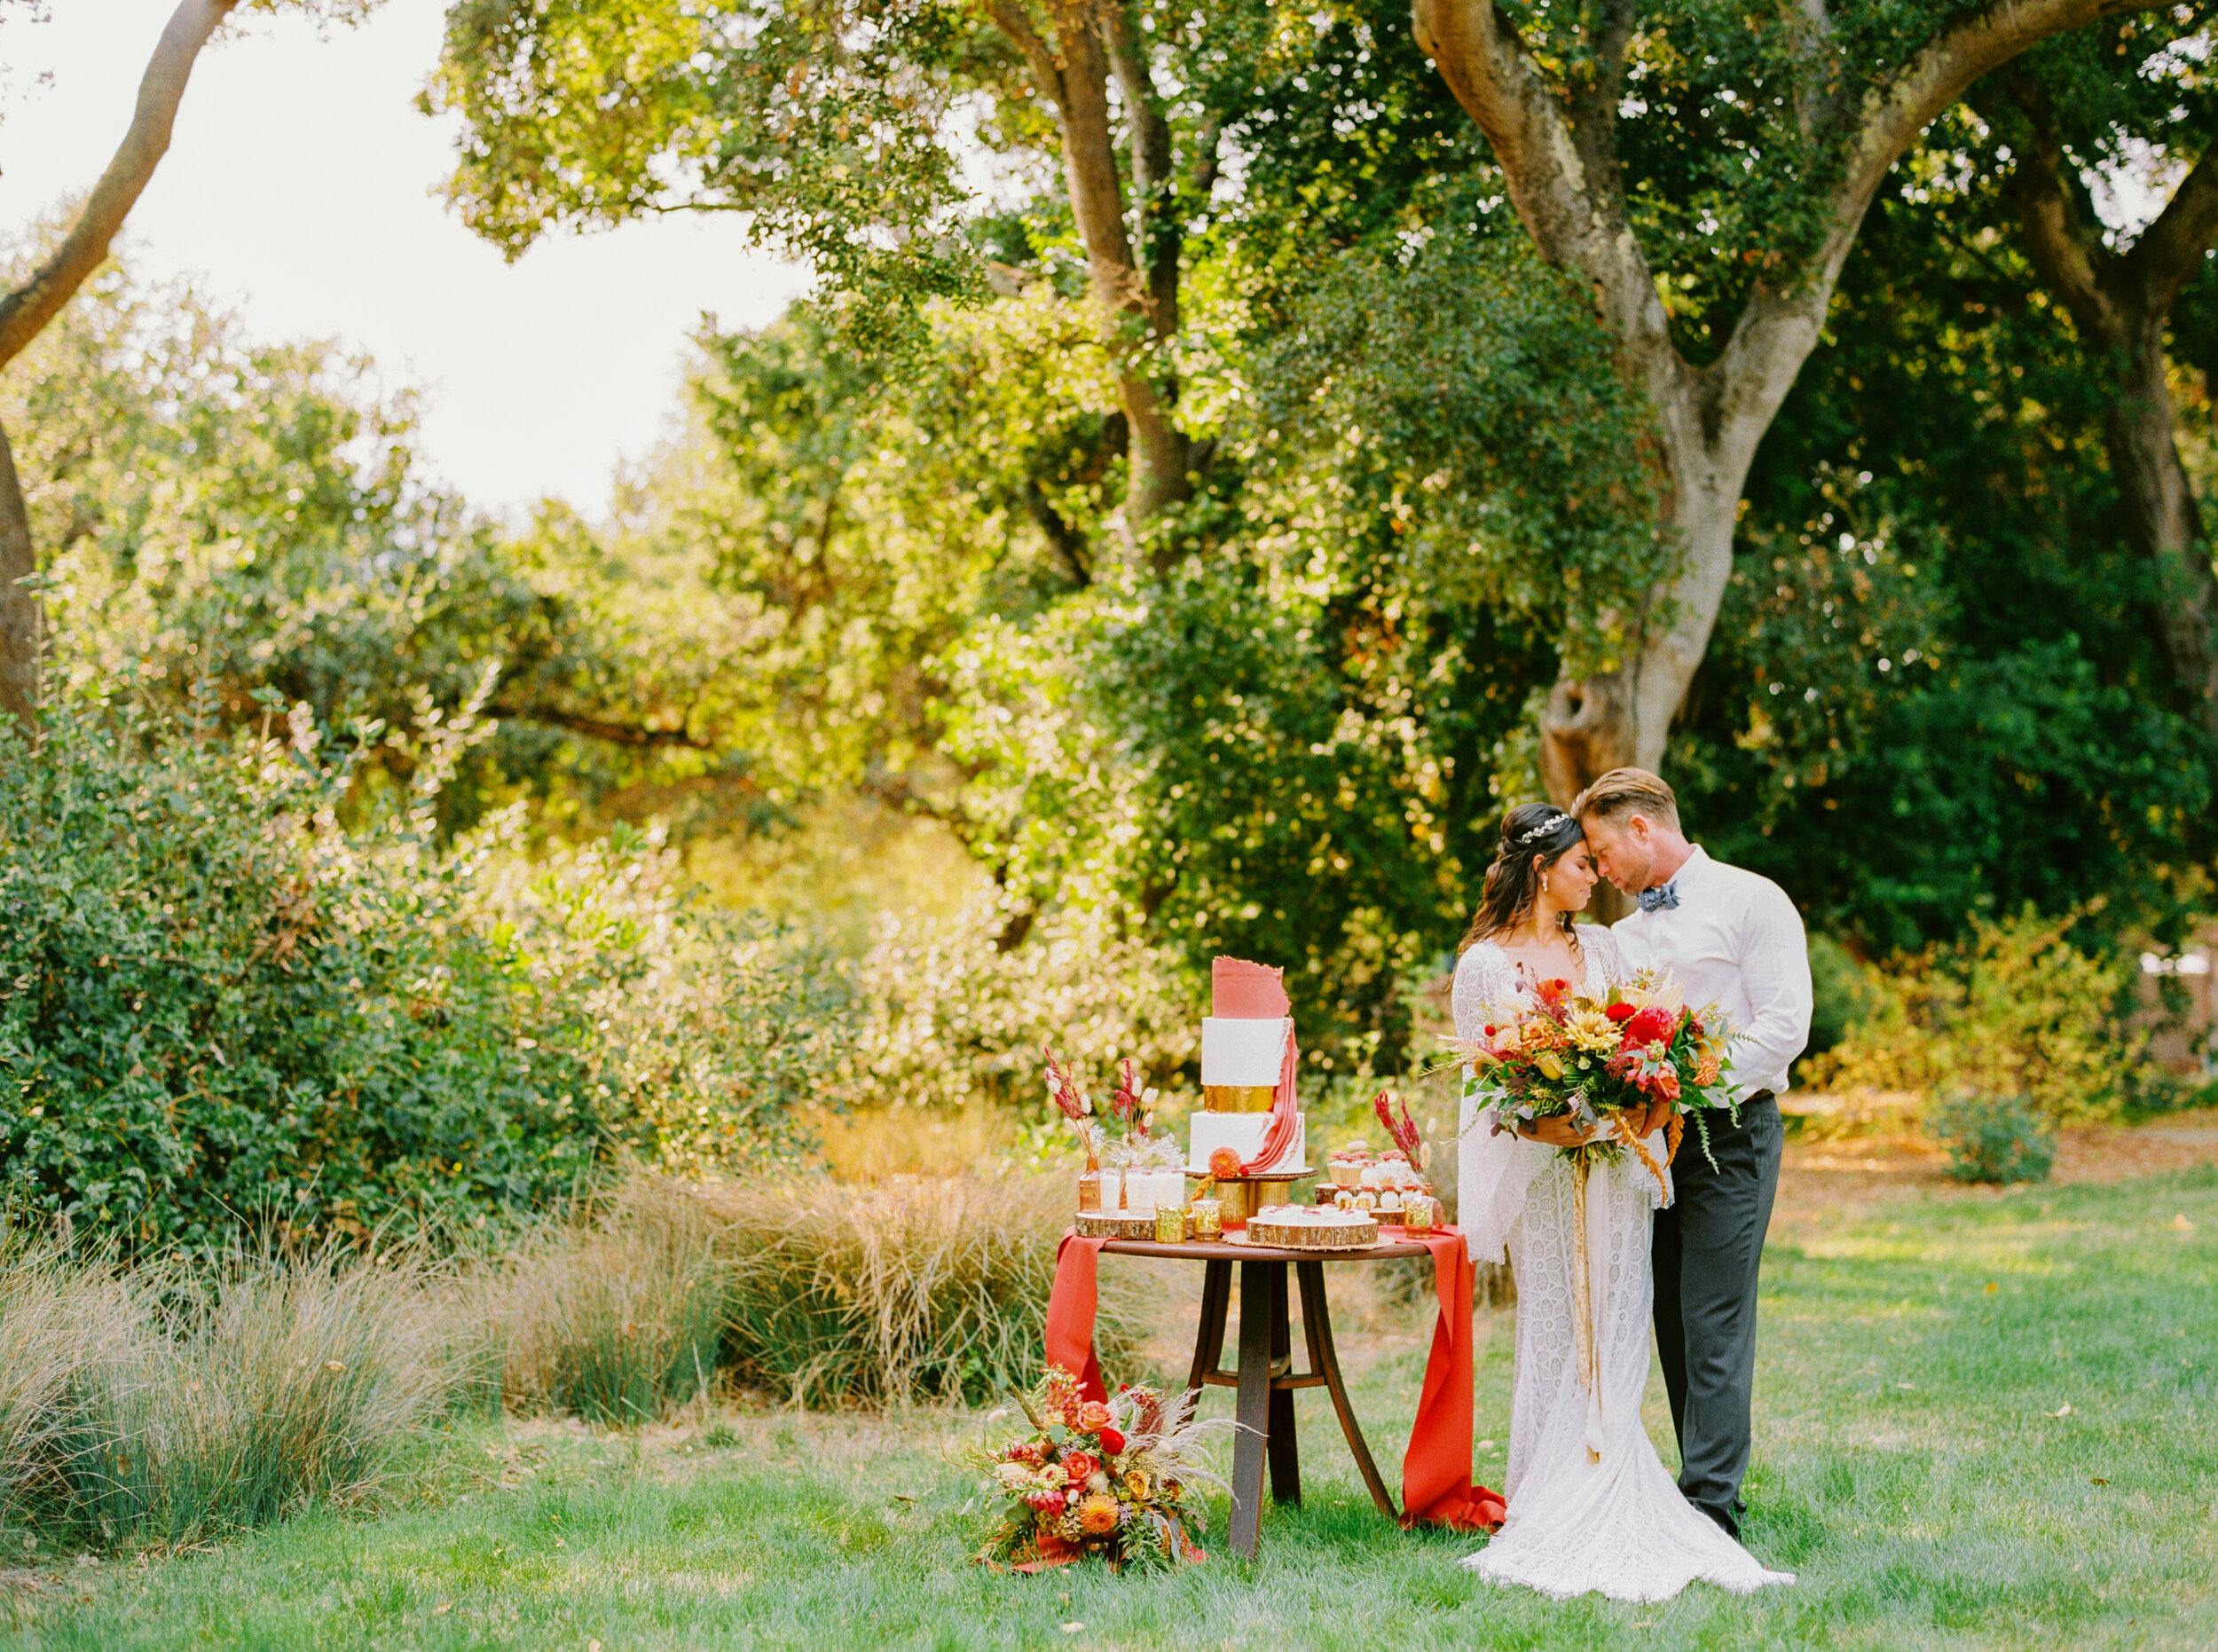 Sarahi Hadden - An Earthy Summer Boho Inspired Wedding with Sunset Hues at Gardener Ranch-42.jpg